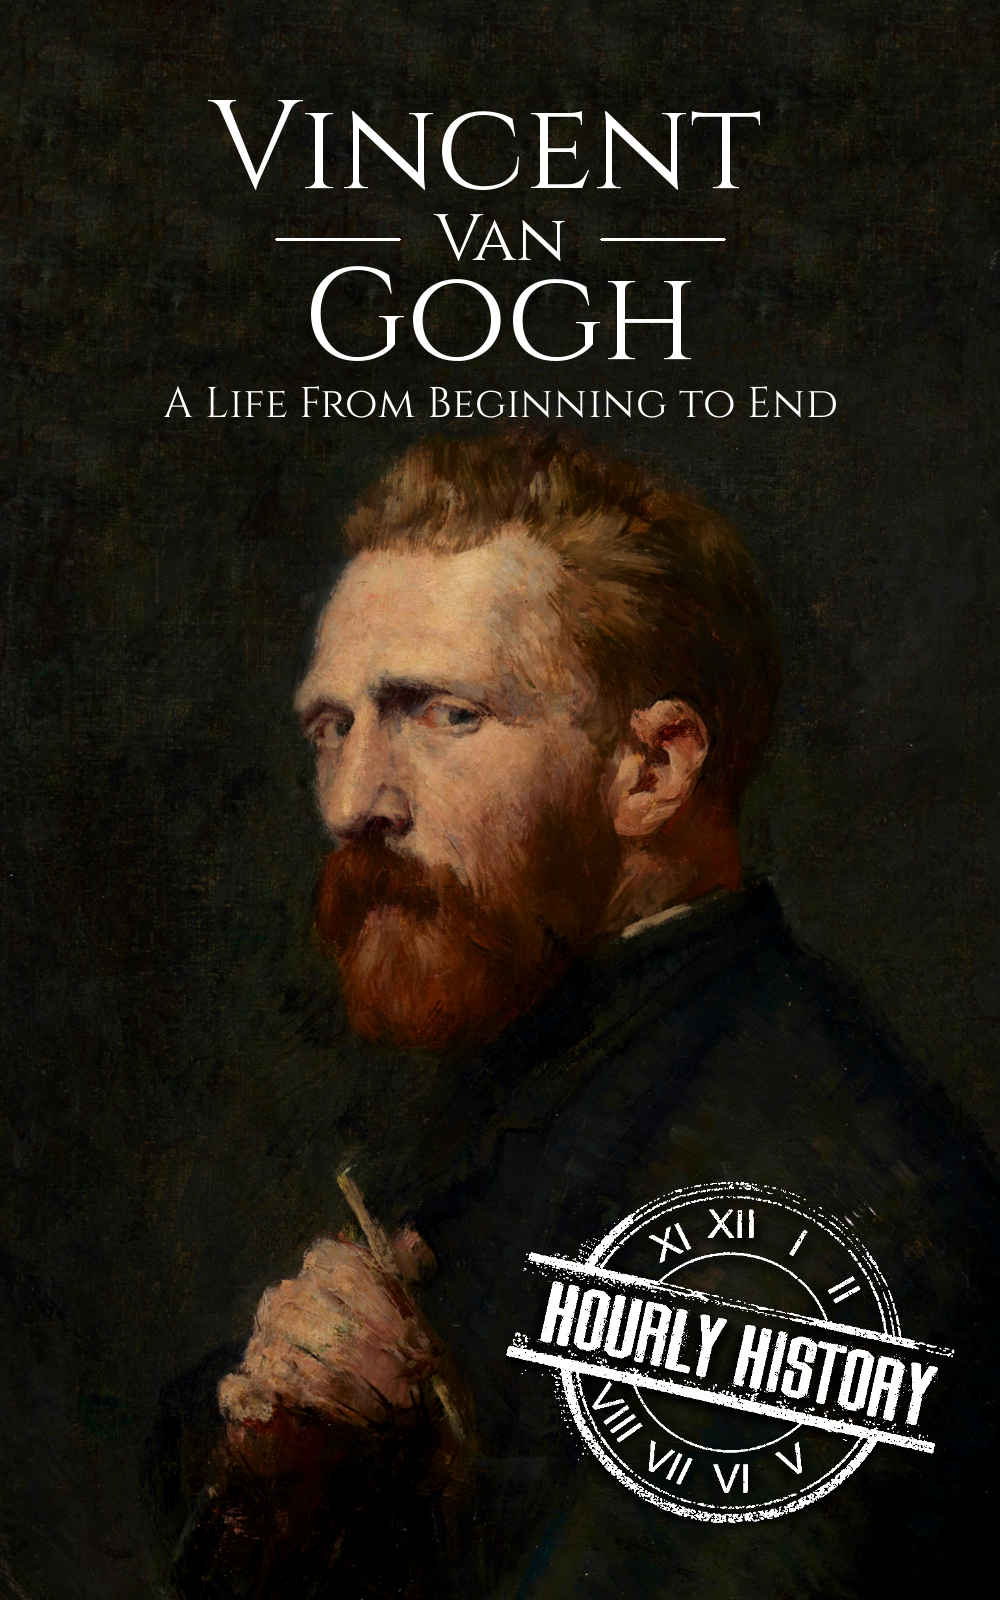 biography of vincent van gogh pdf